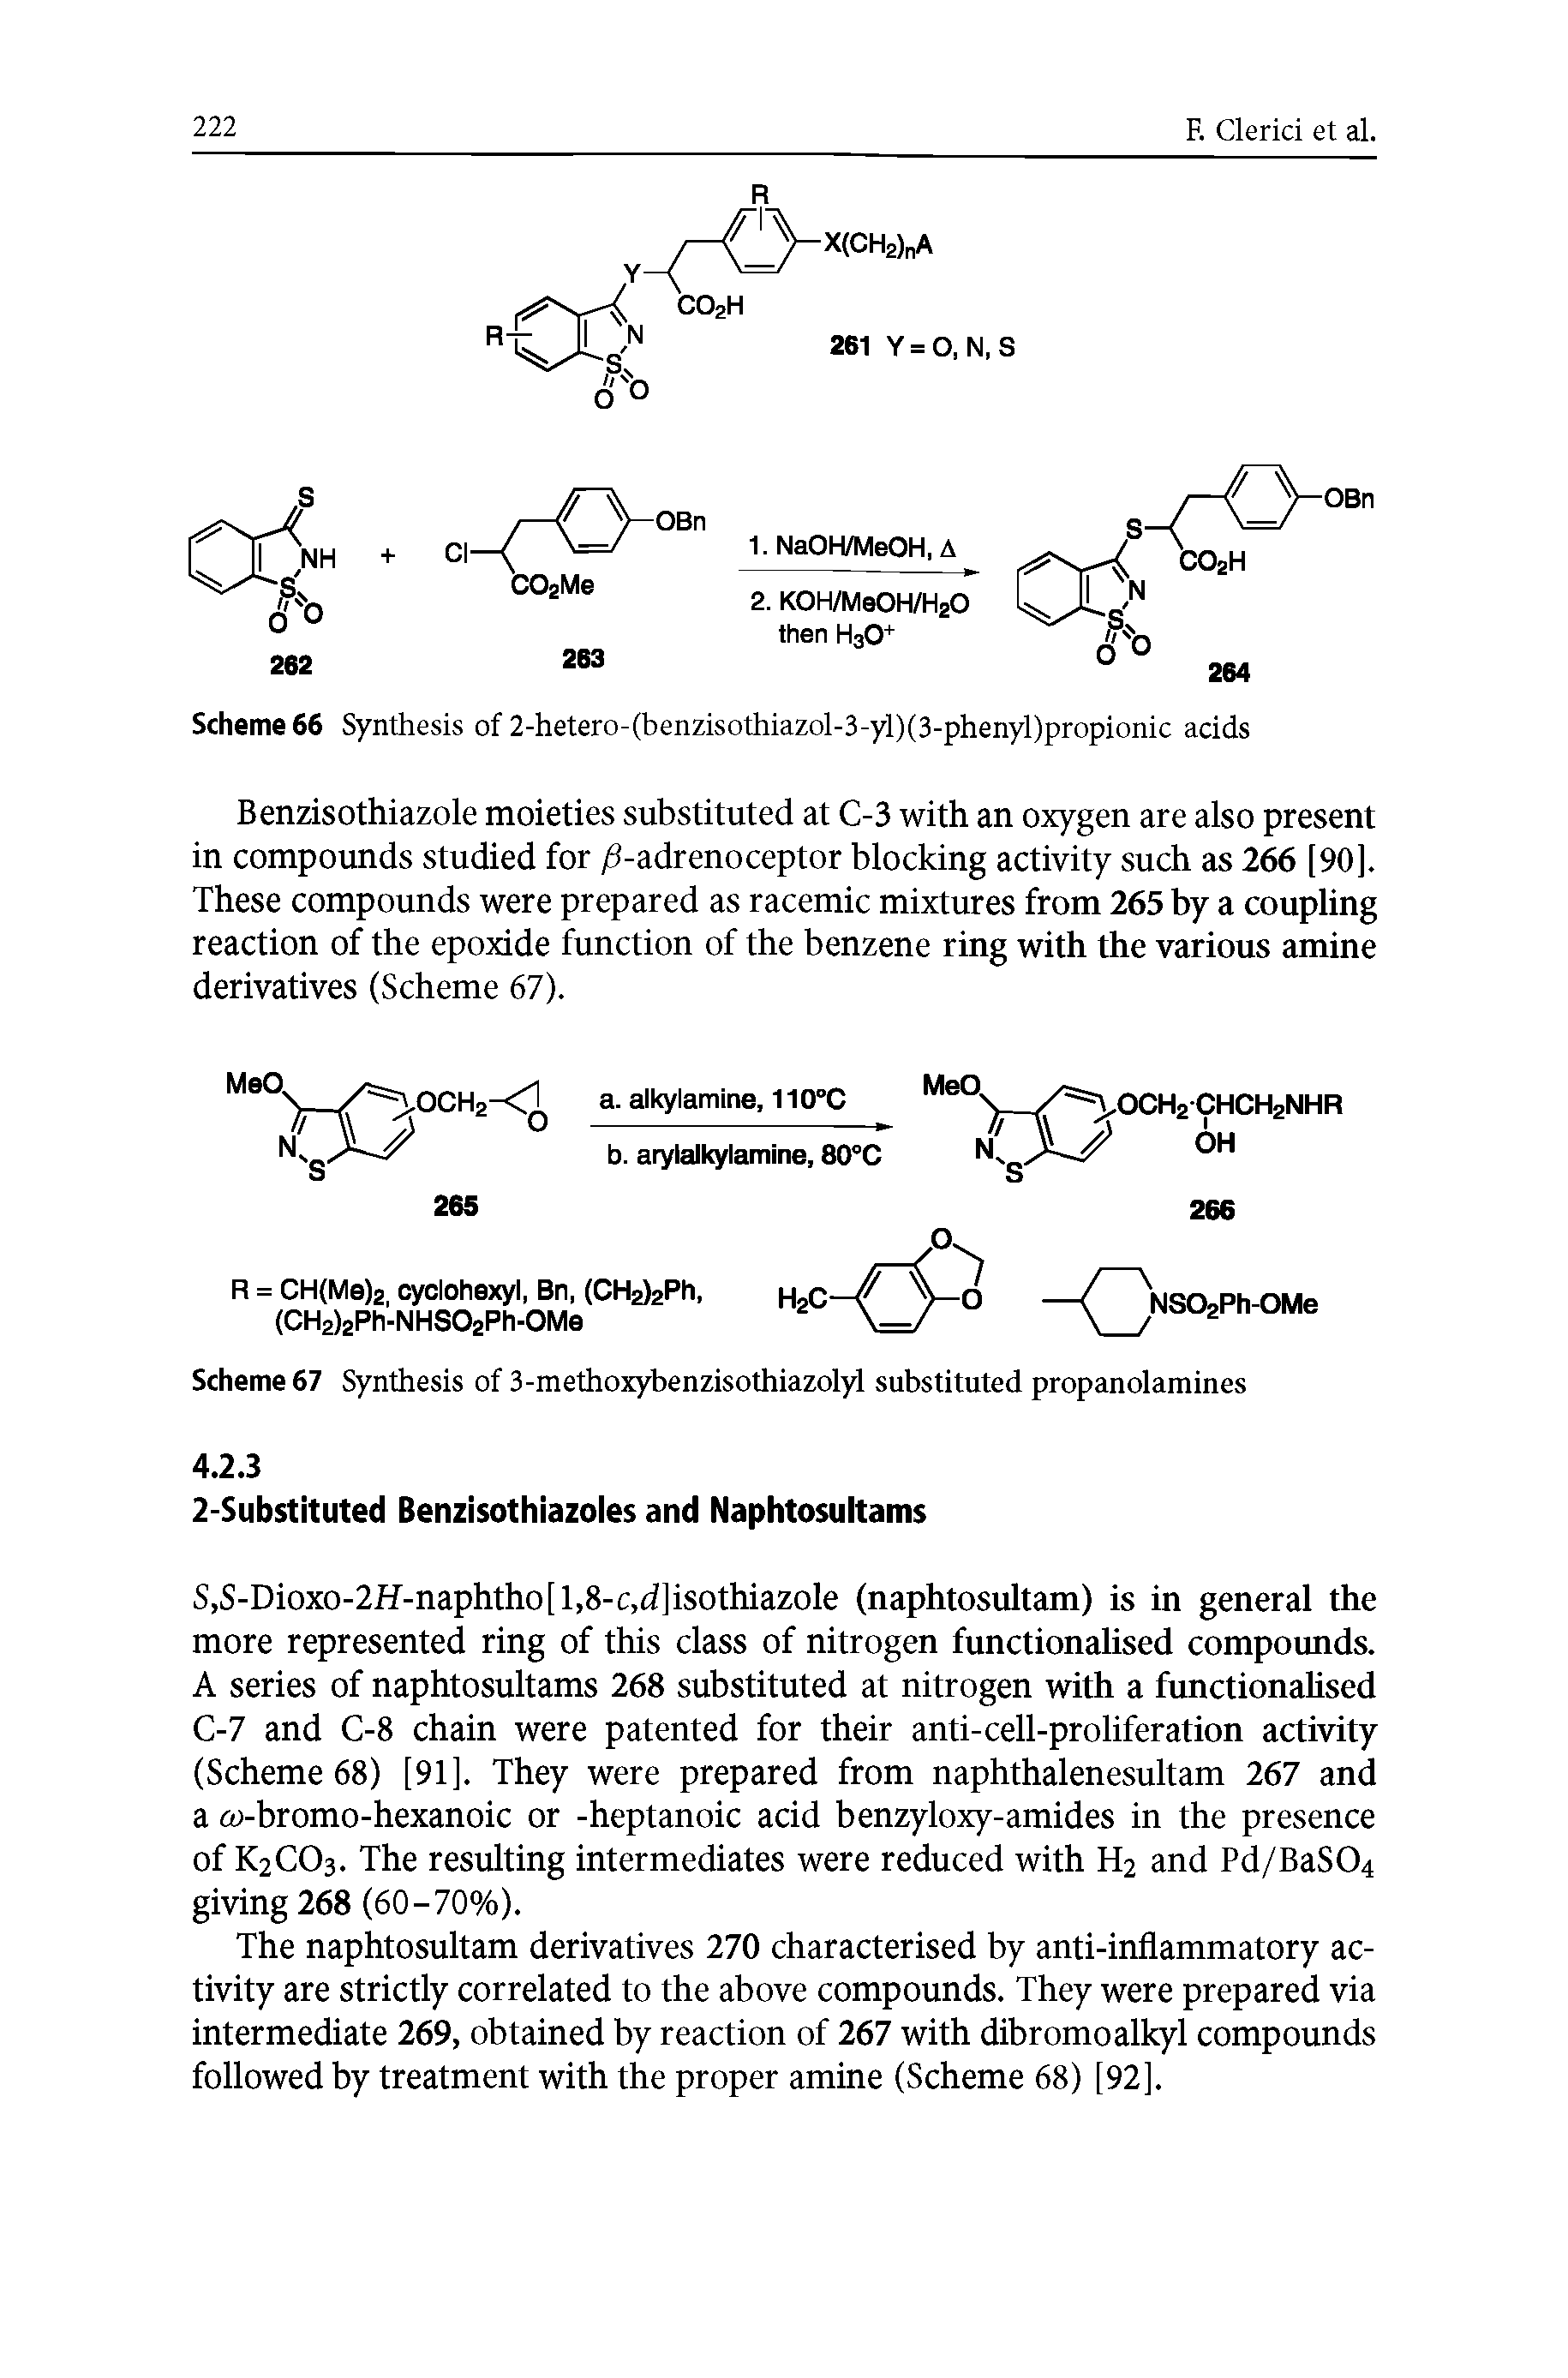 Scheme 66 Synthesis of 2-hetero-(benzisothiazol-3-yl)(3-phenyl)propionic acids...